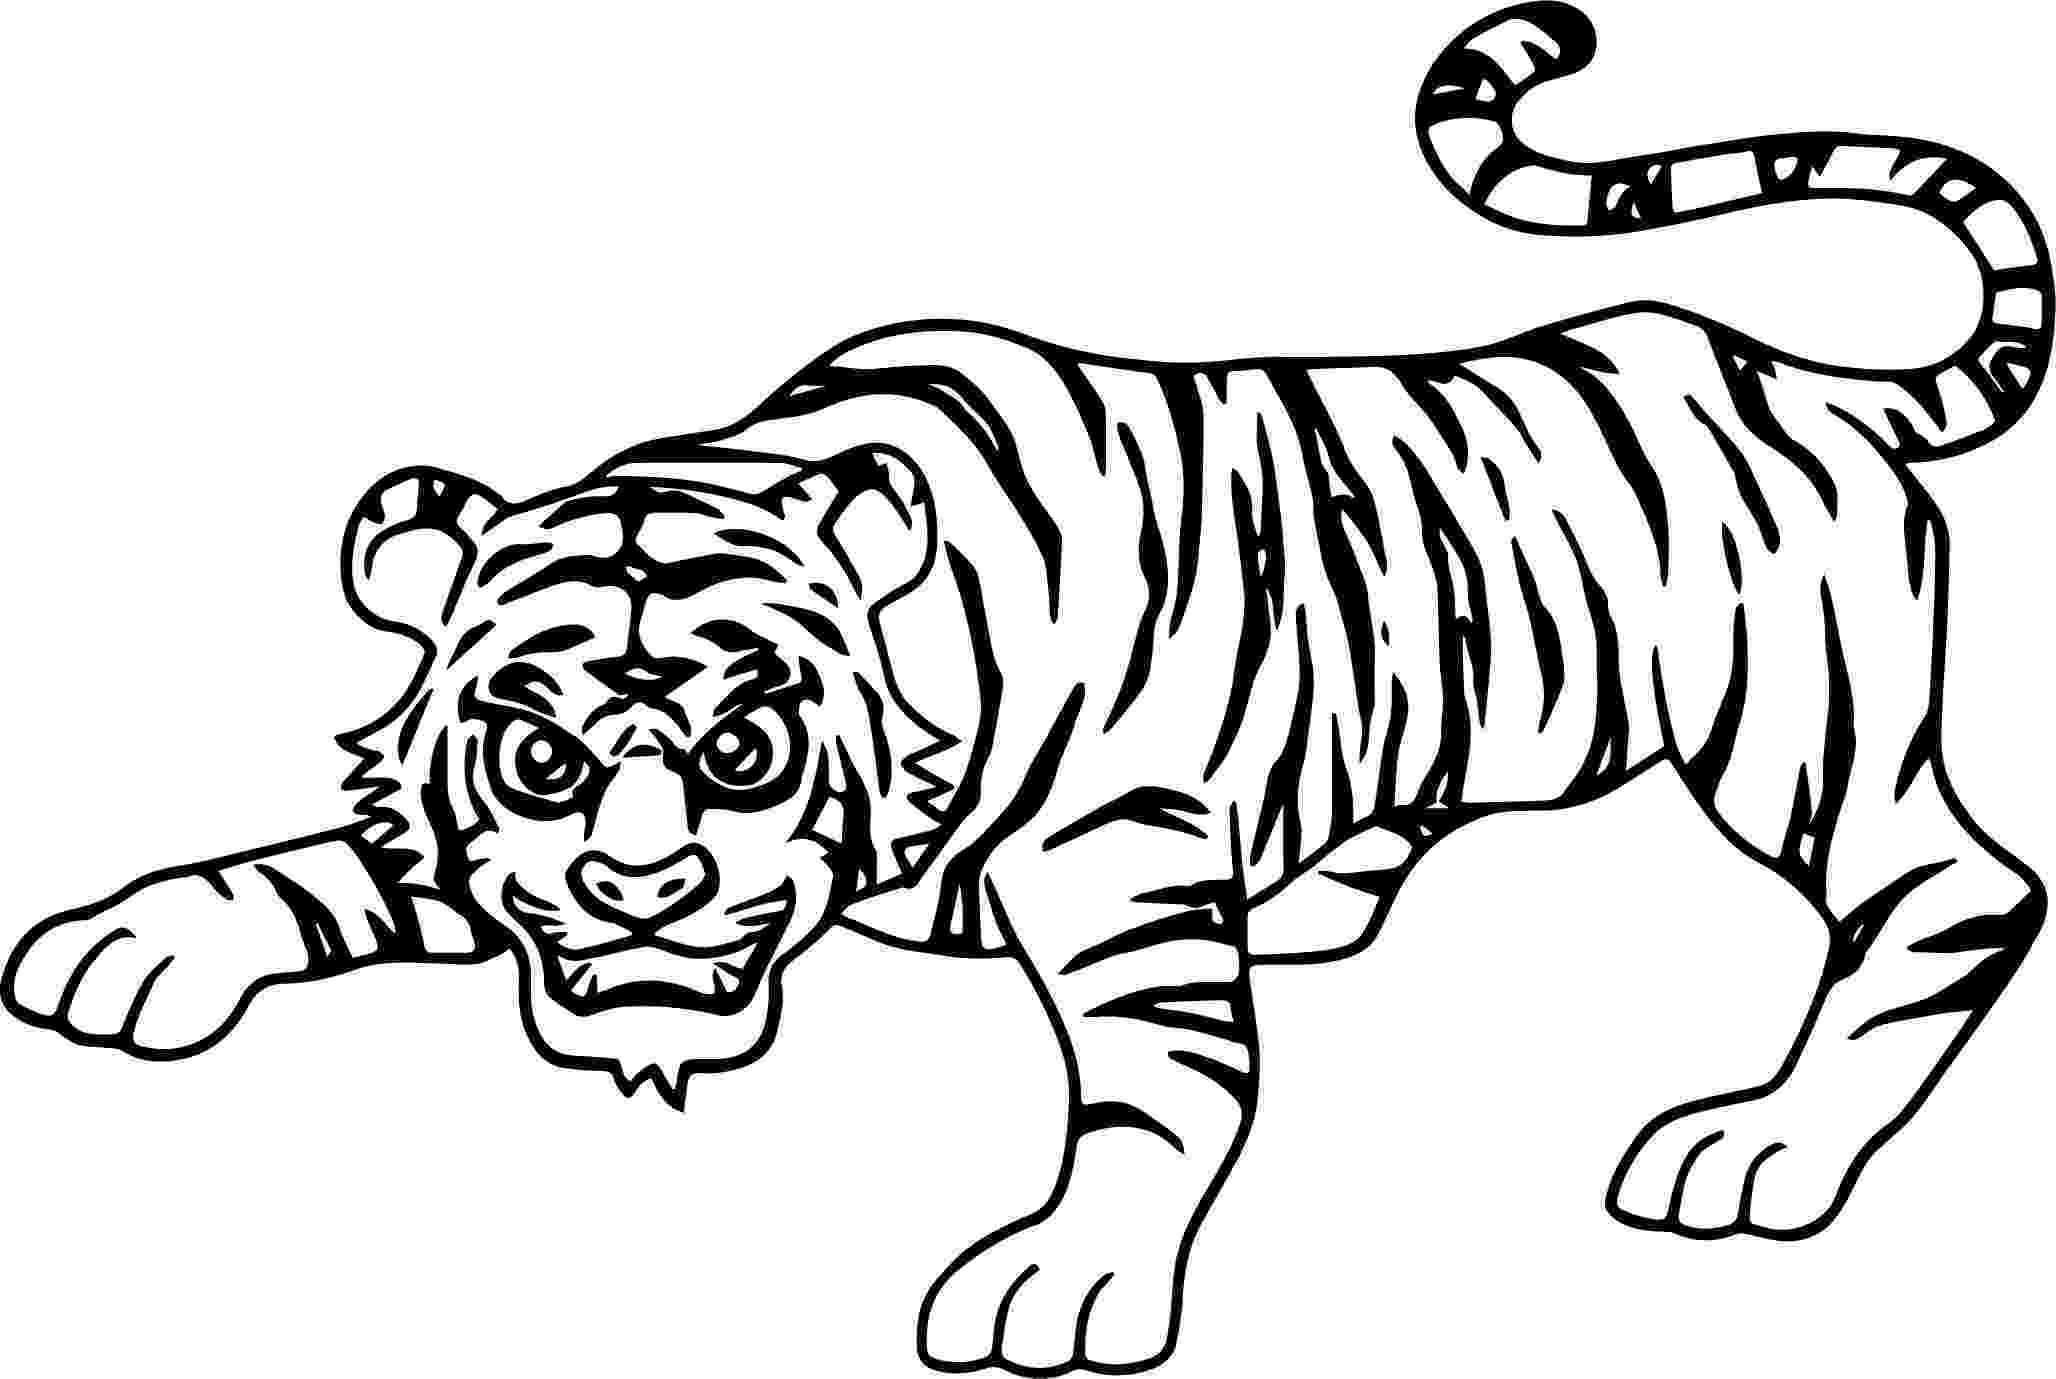 siberian tiger coloring page siberian tiger coloring page at getcoloringscom free tiger siberian coloring page 